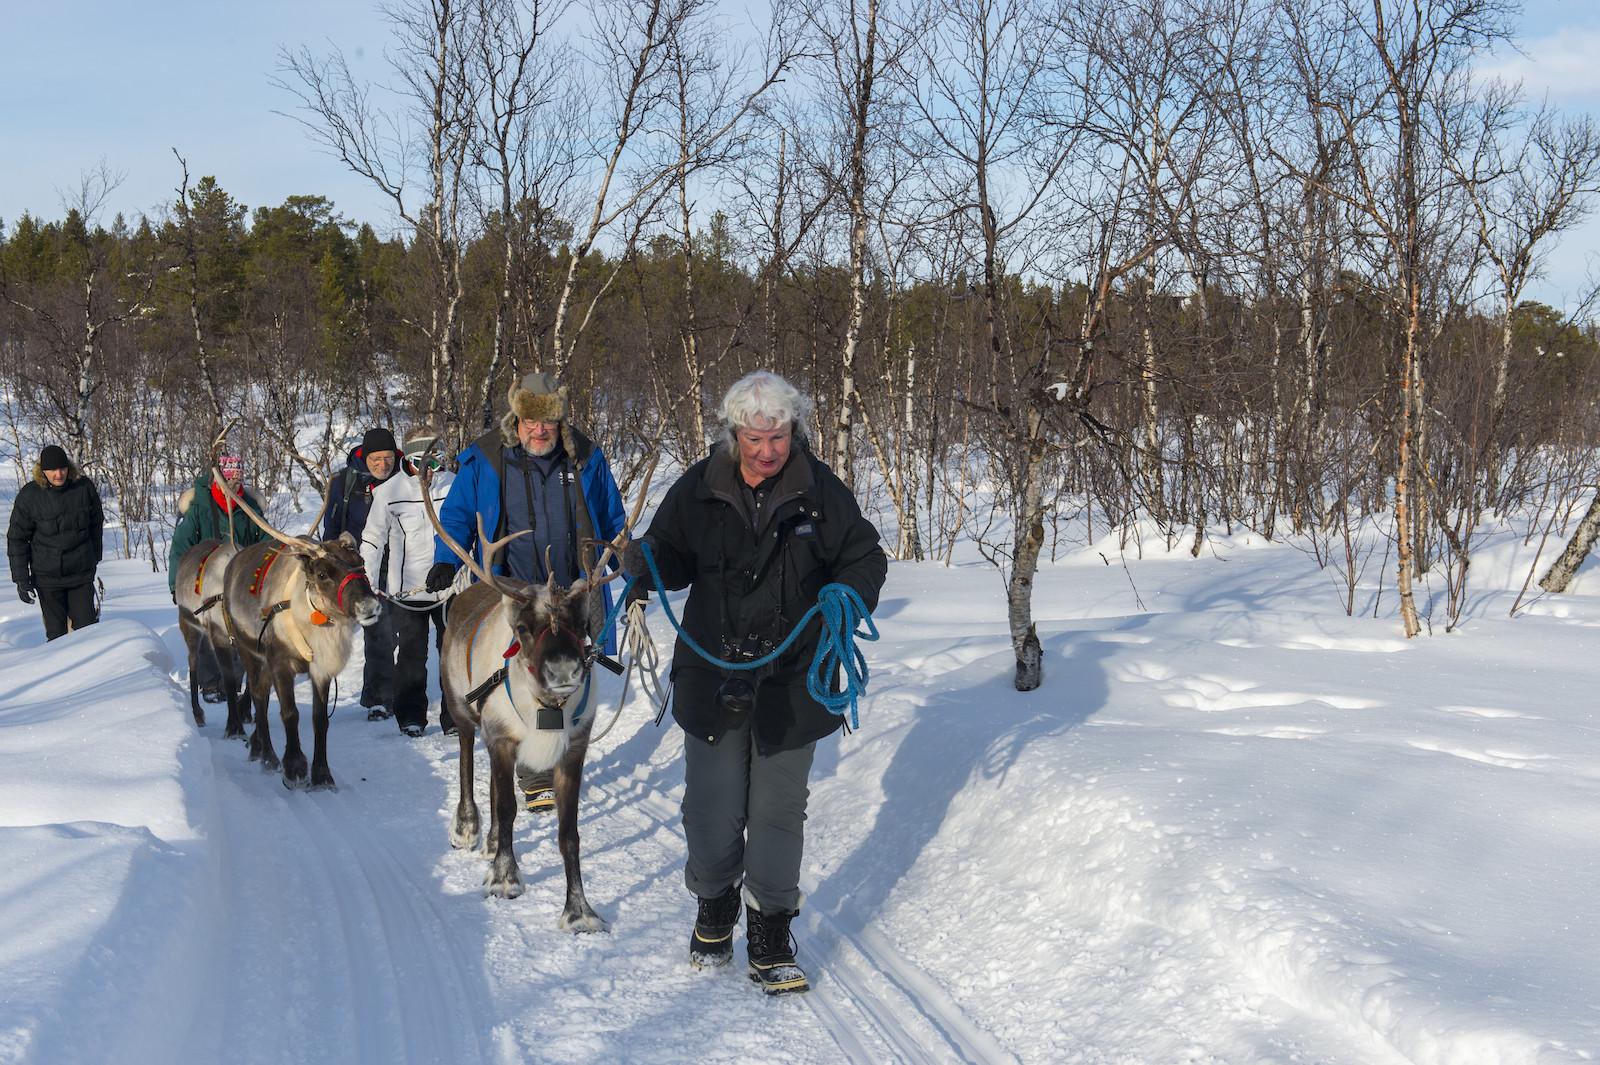 a line of people in winter gear lead reindeer along a snowy path